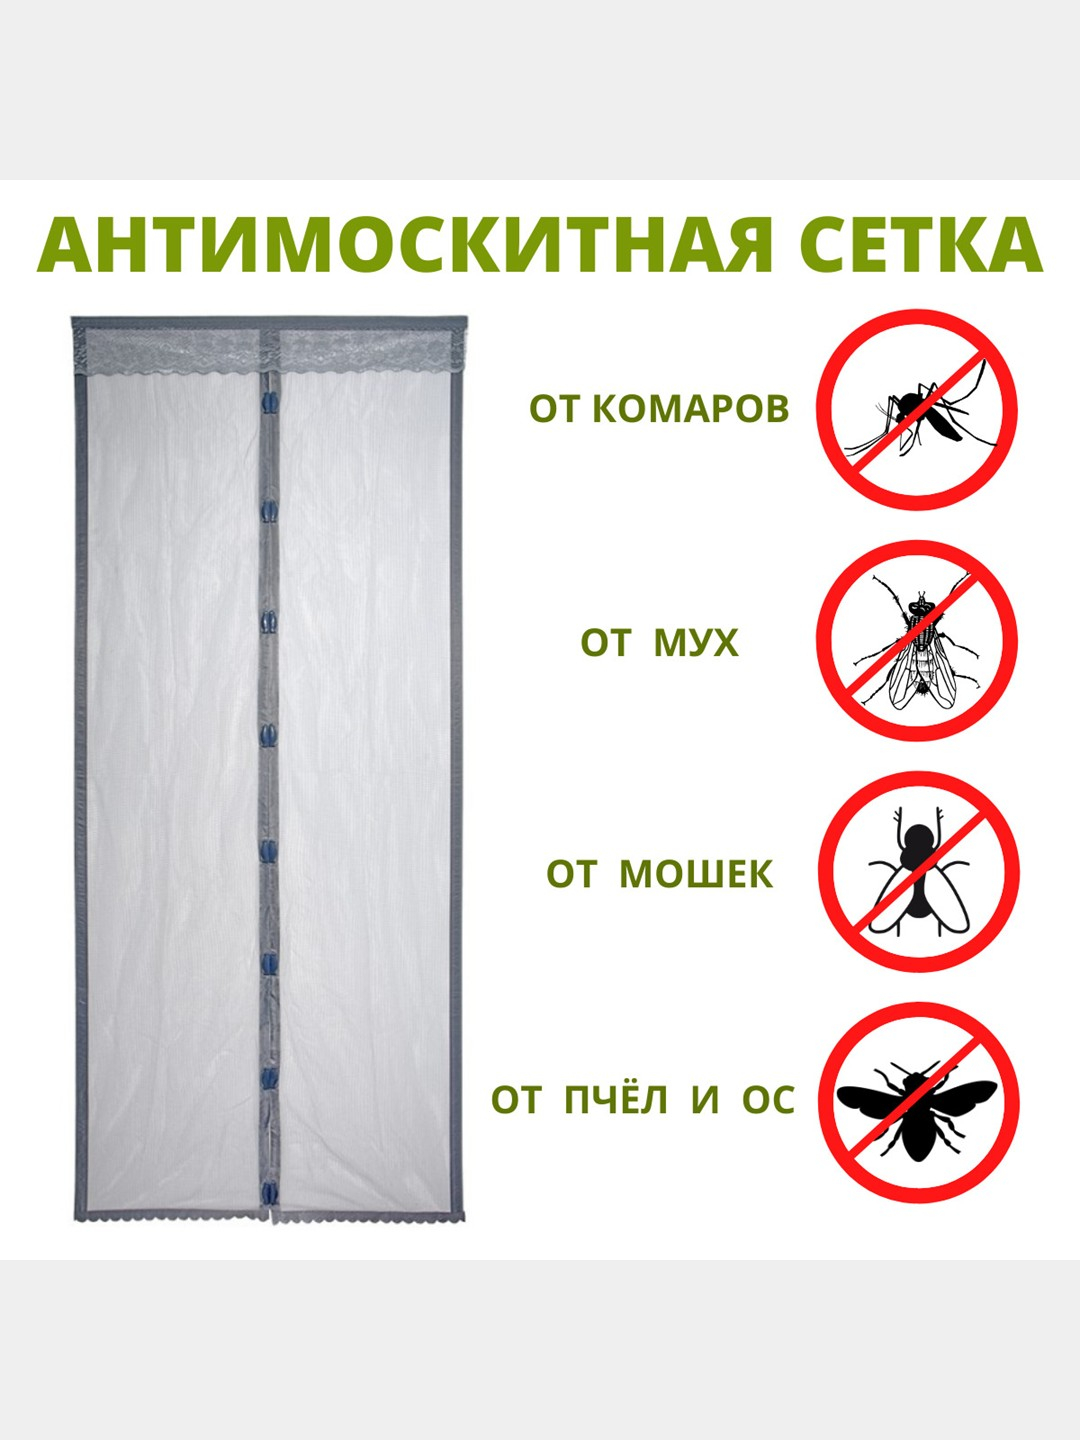 Сетка от комаров на дверь на магнитах